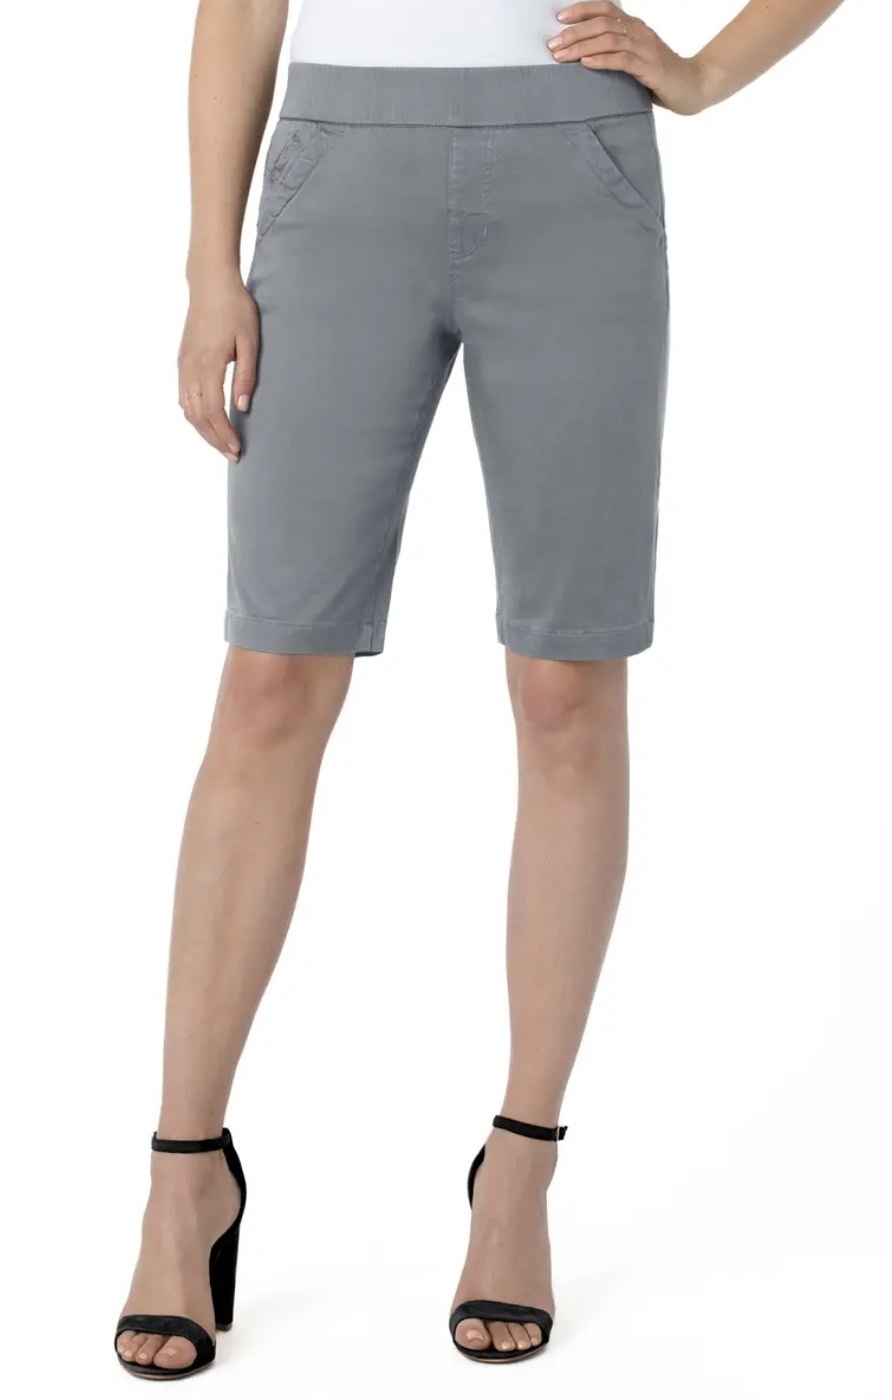 the grey shorts